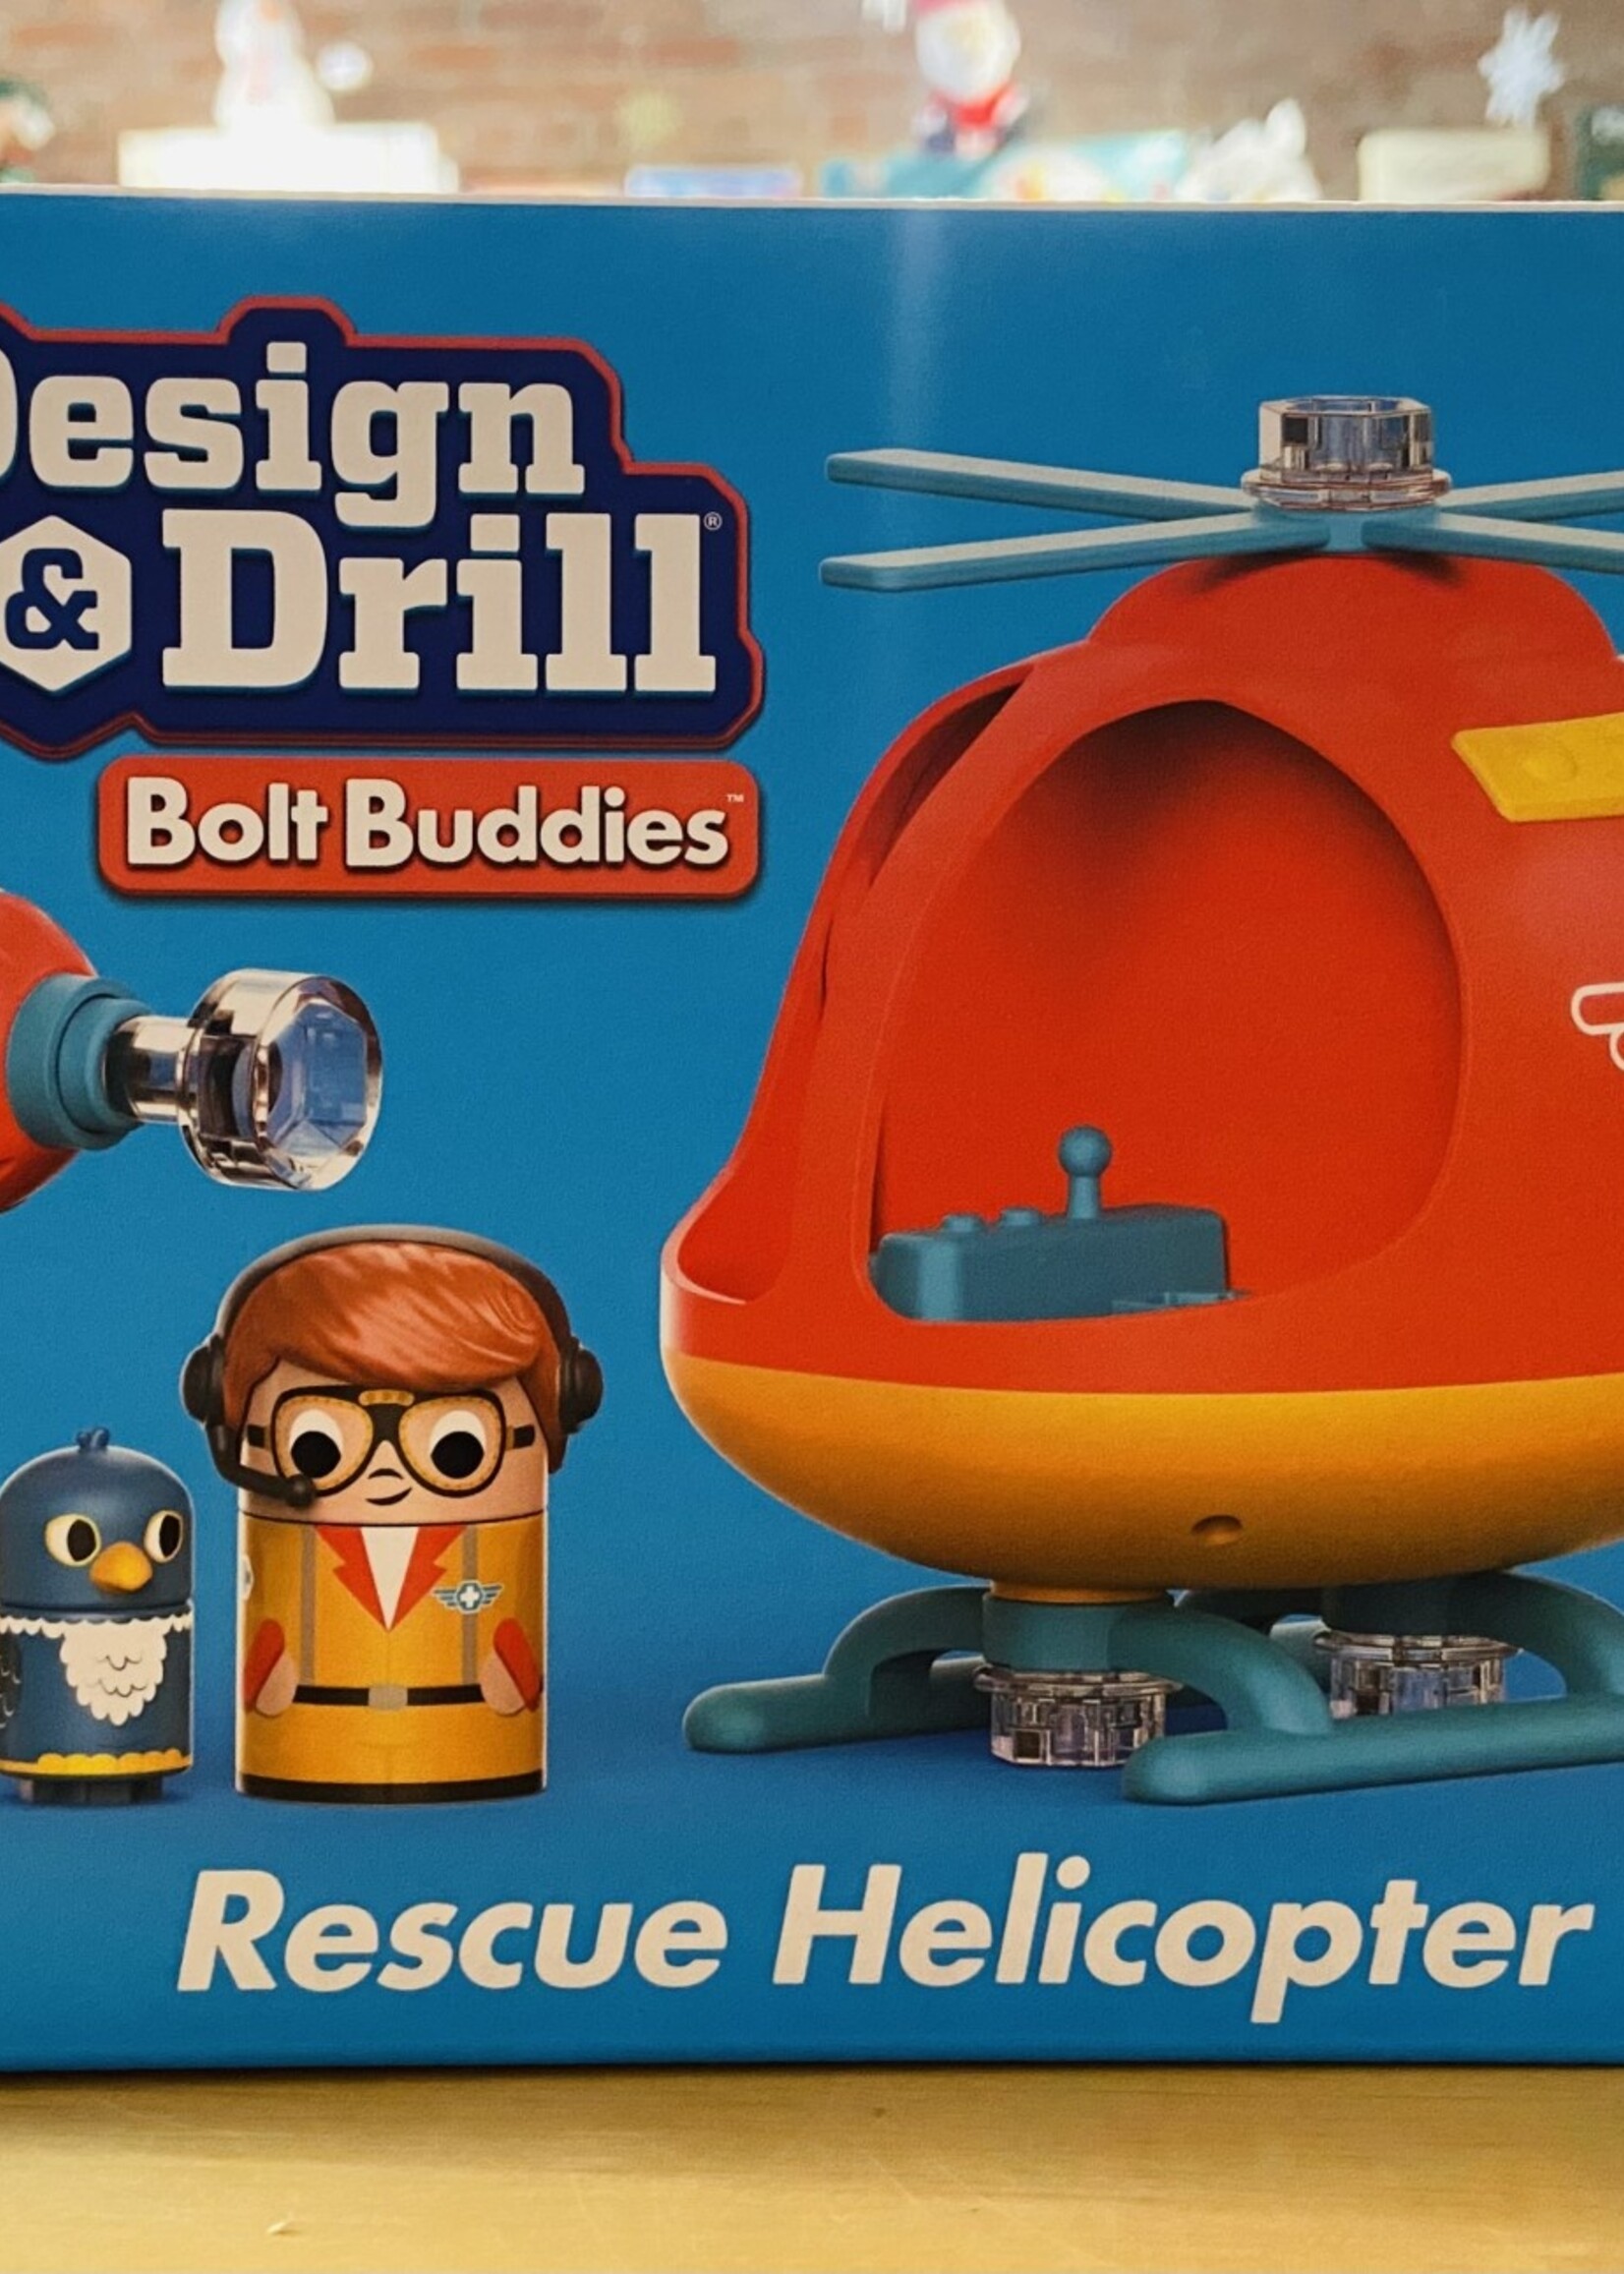 Design & Drill Rescue Helicopter